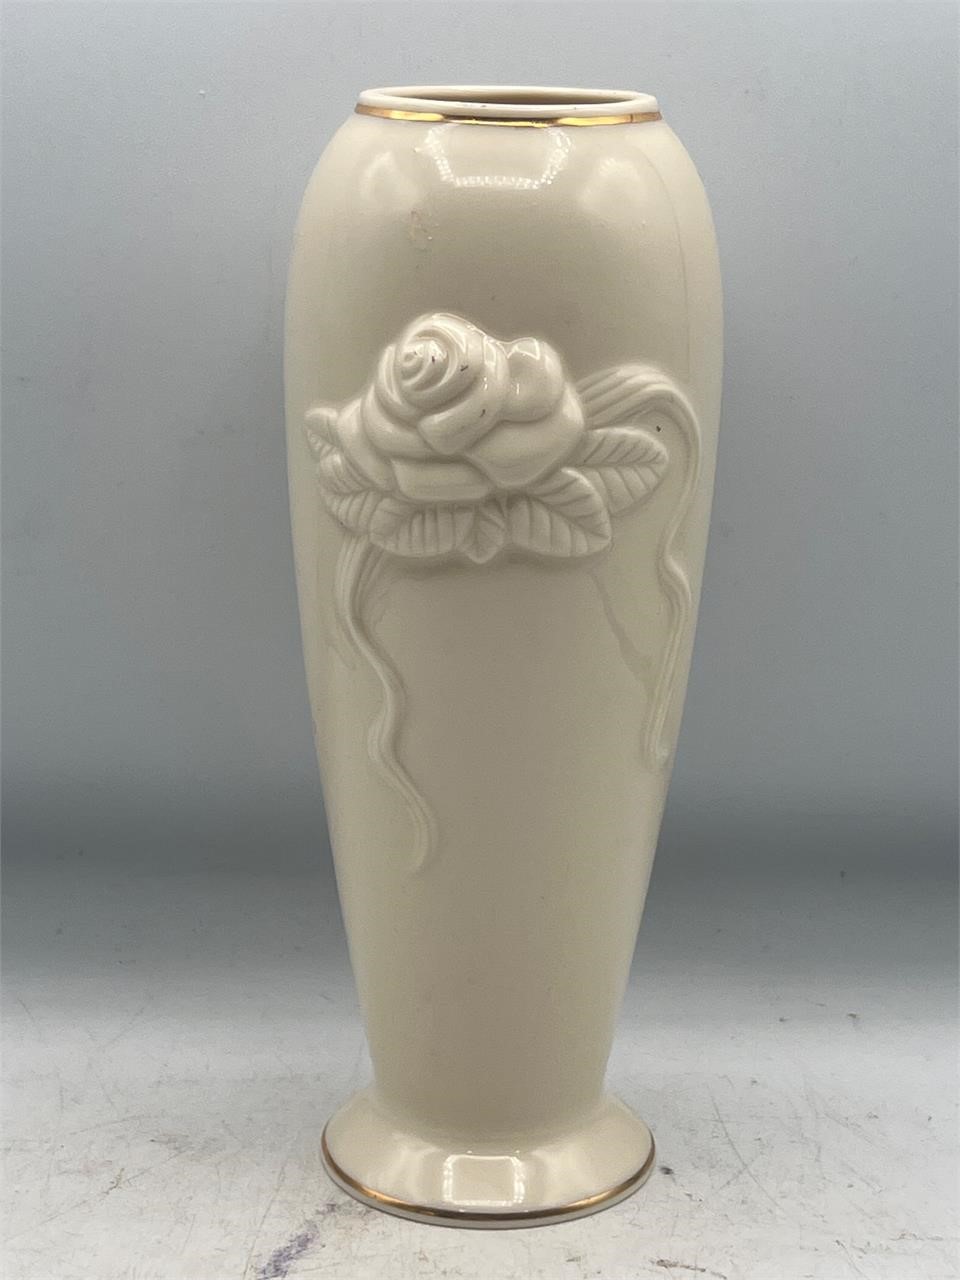 Lenox rose bud vase